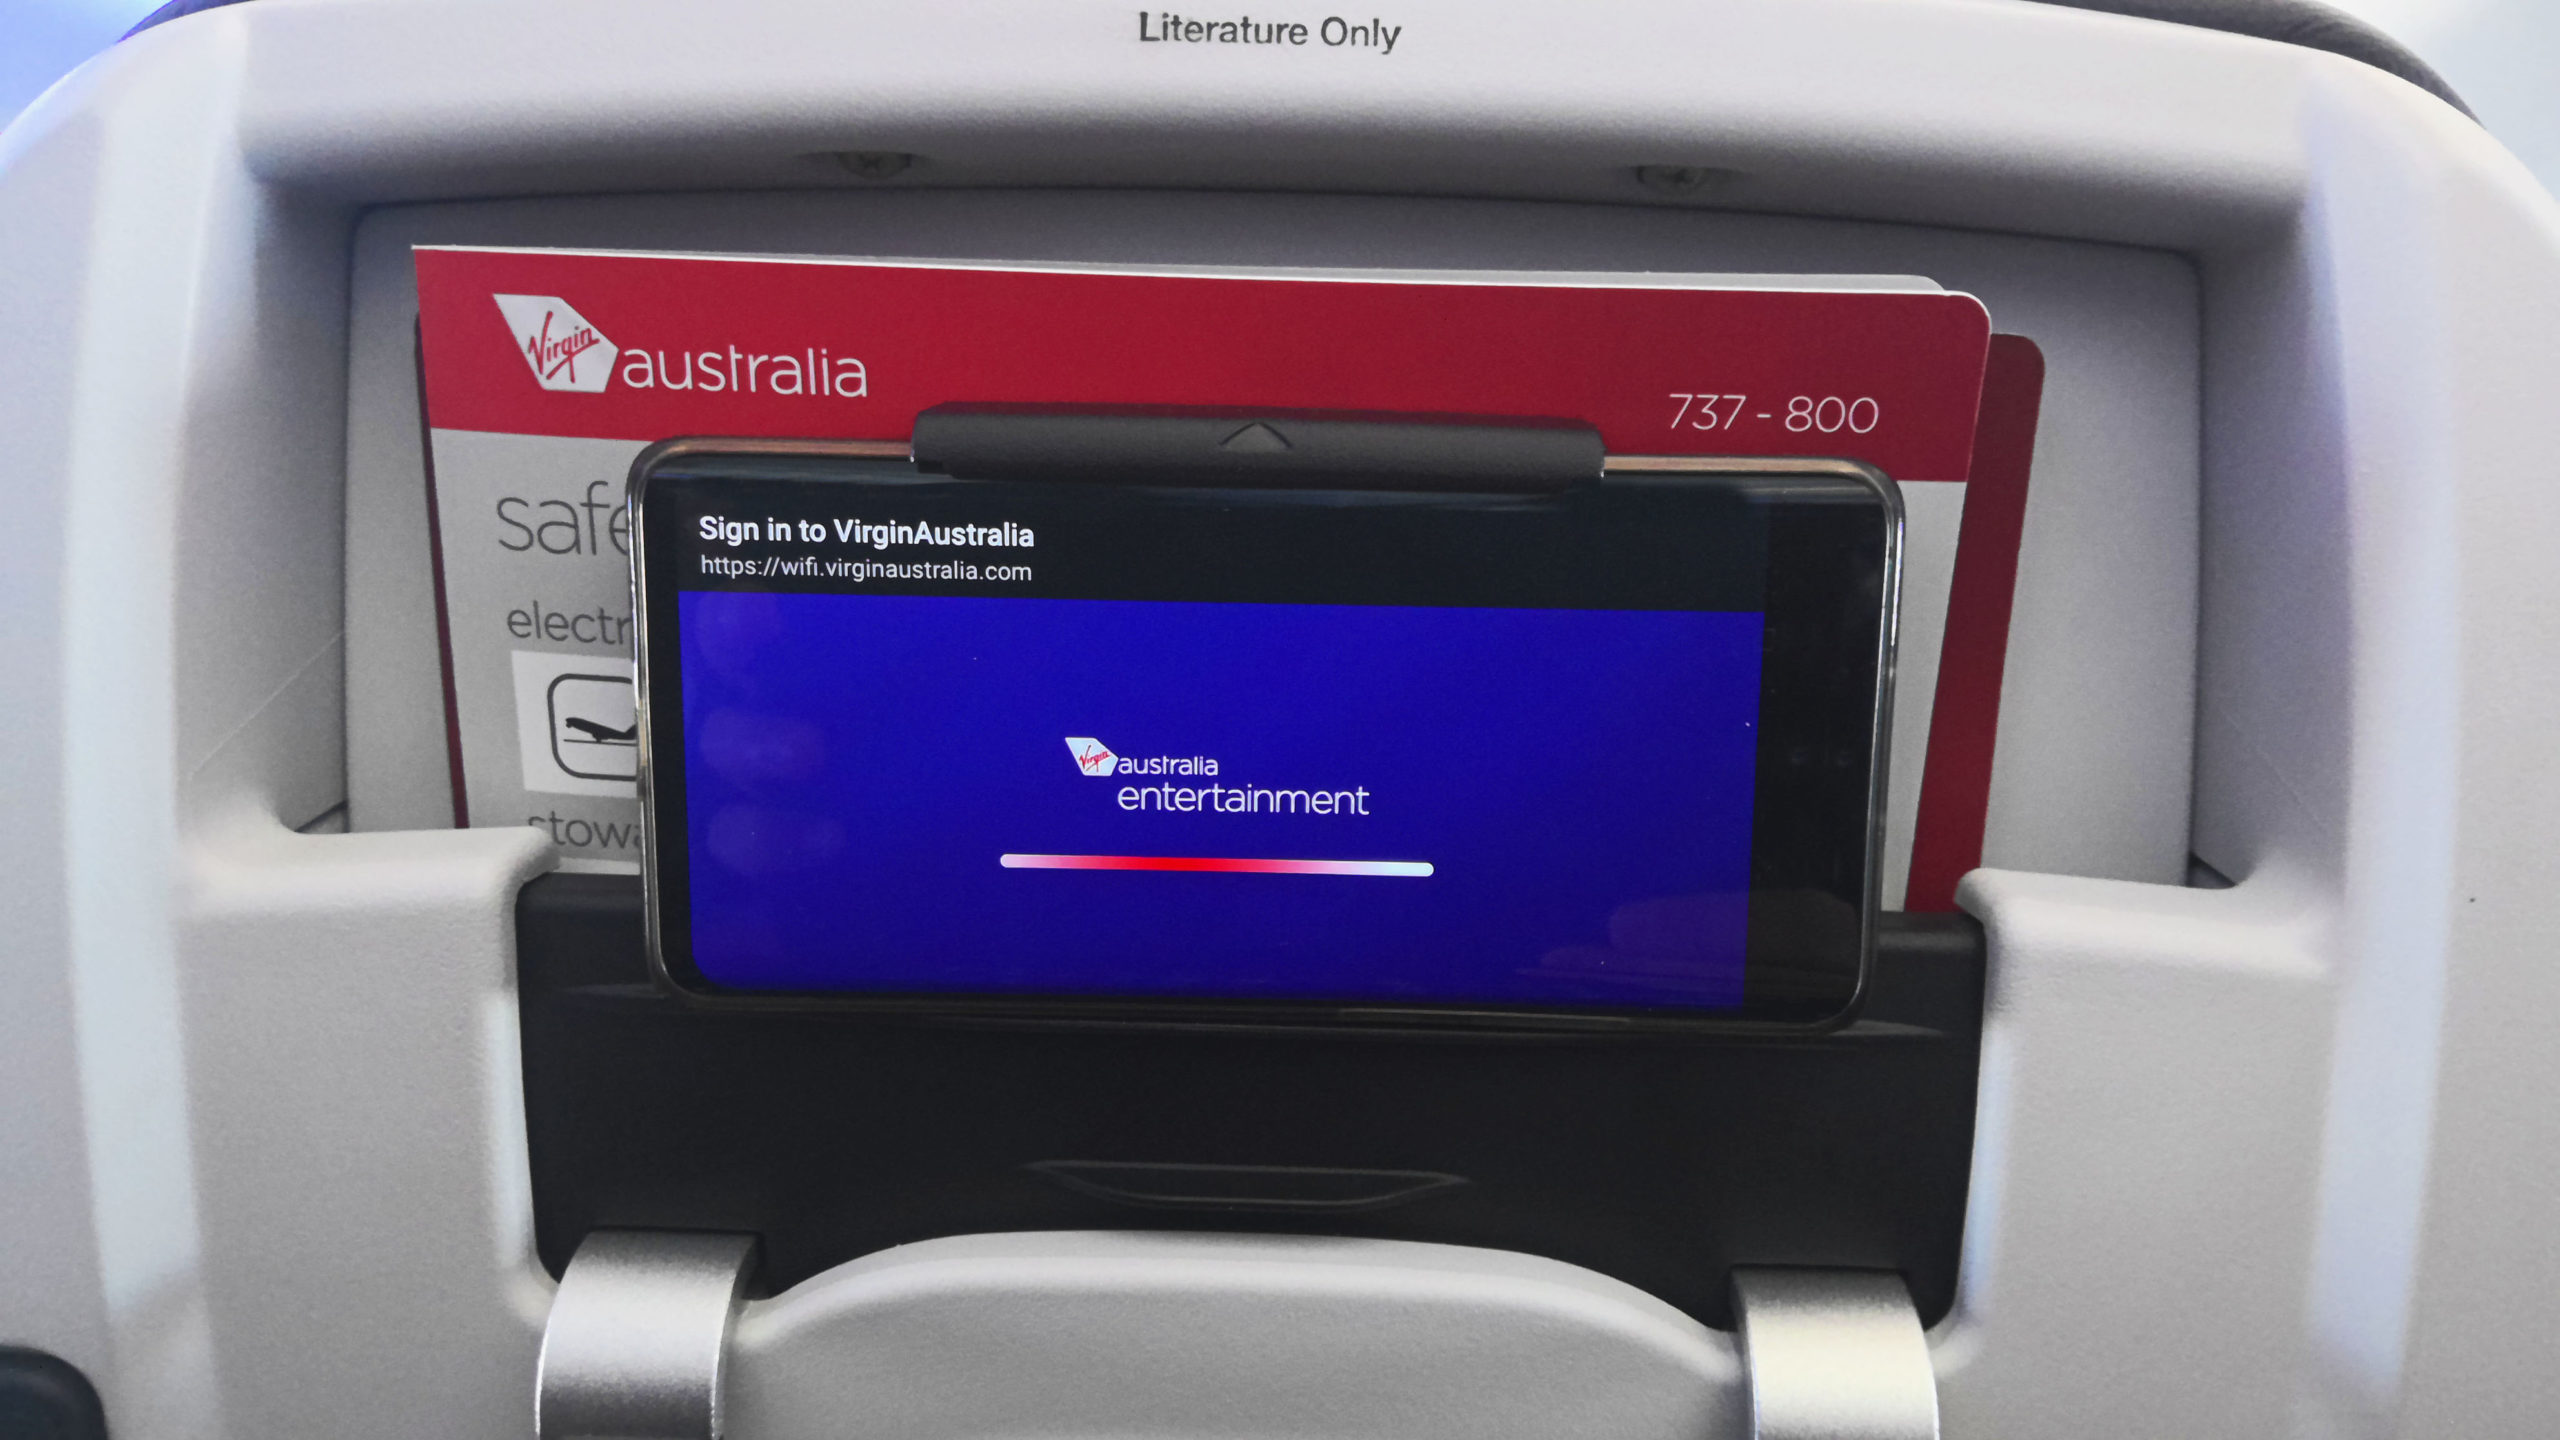 Virgin Australia's new Economy Class entertainment